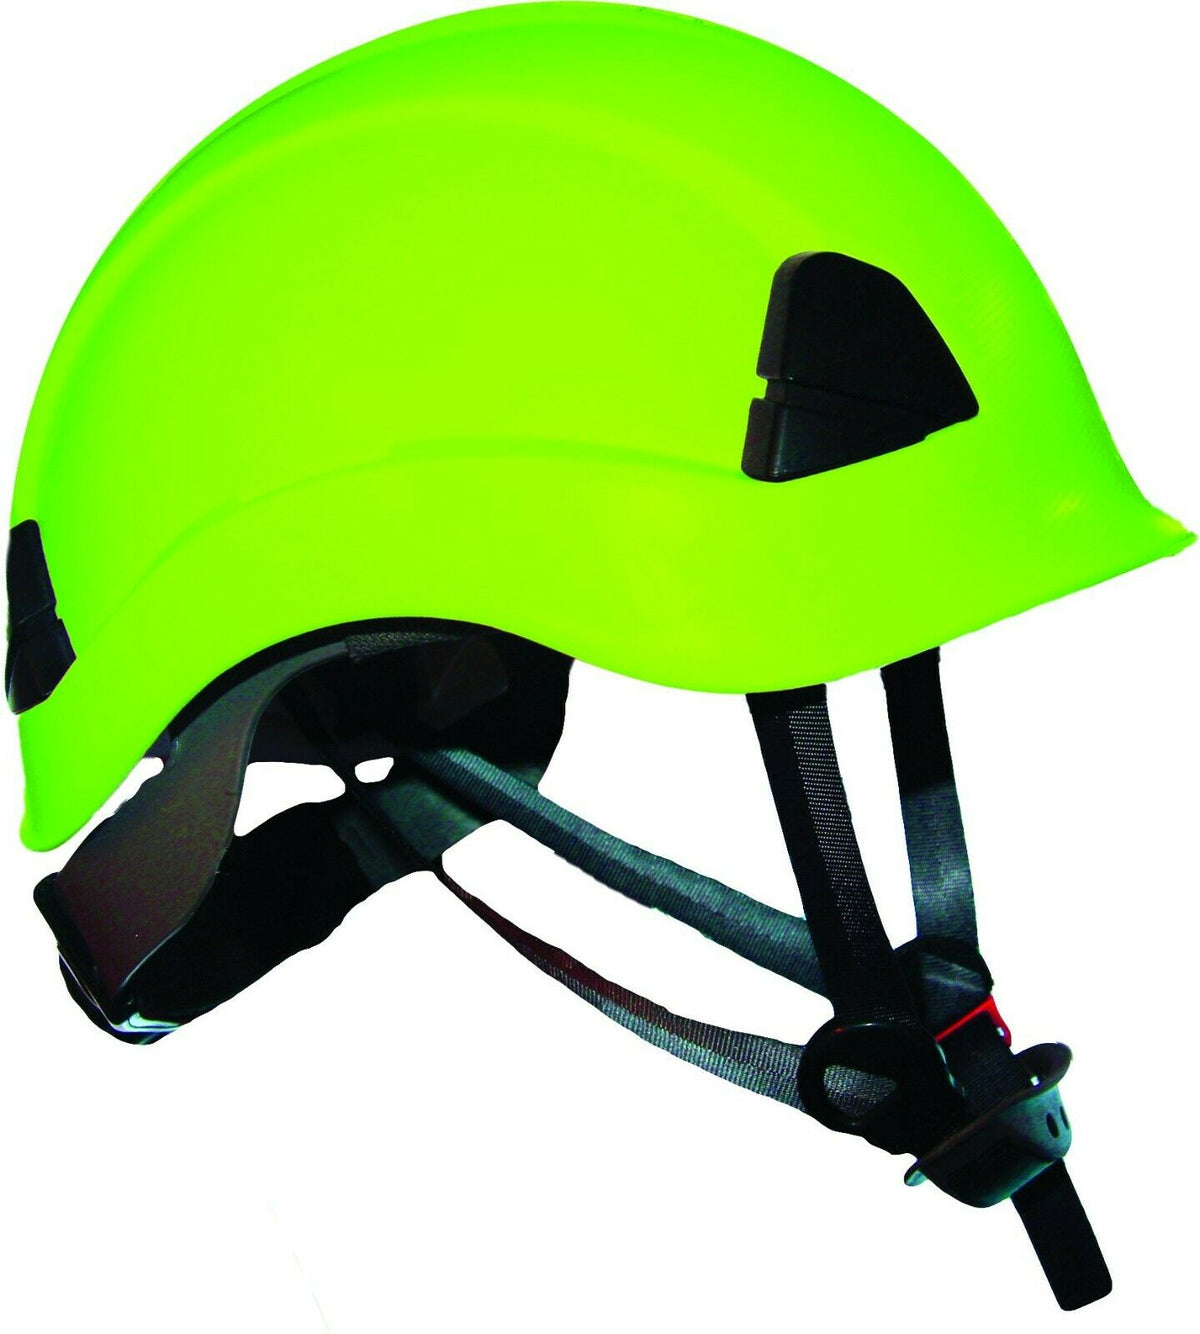 Arborist Climbing Safety Helmet Meets ANSI Tree Climbers Helmet Safety Green